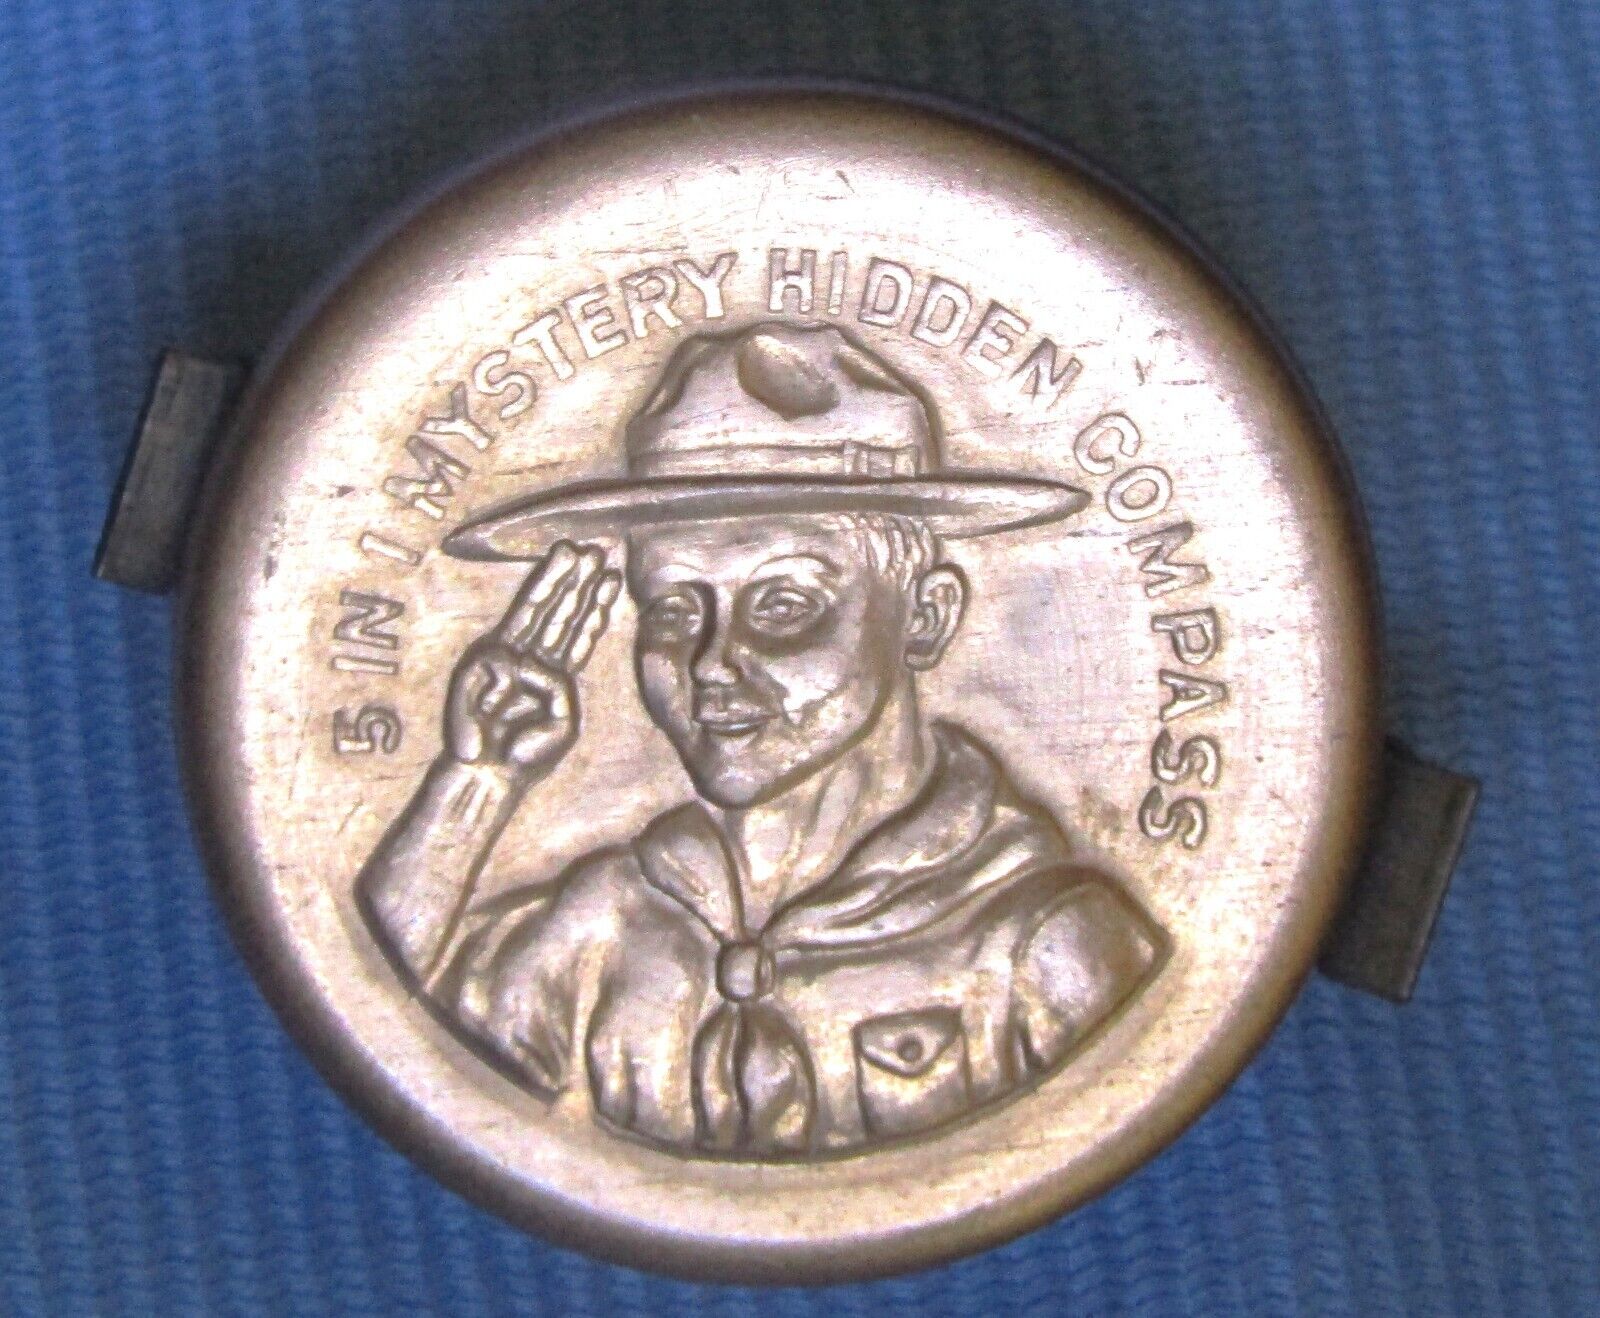 5 in 1 Mystery Hidden (Boy Scout) Compass